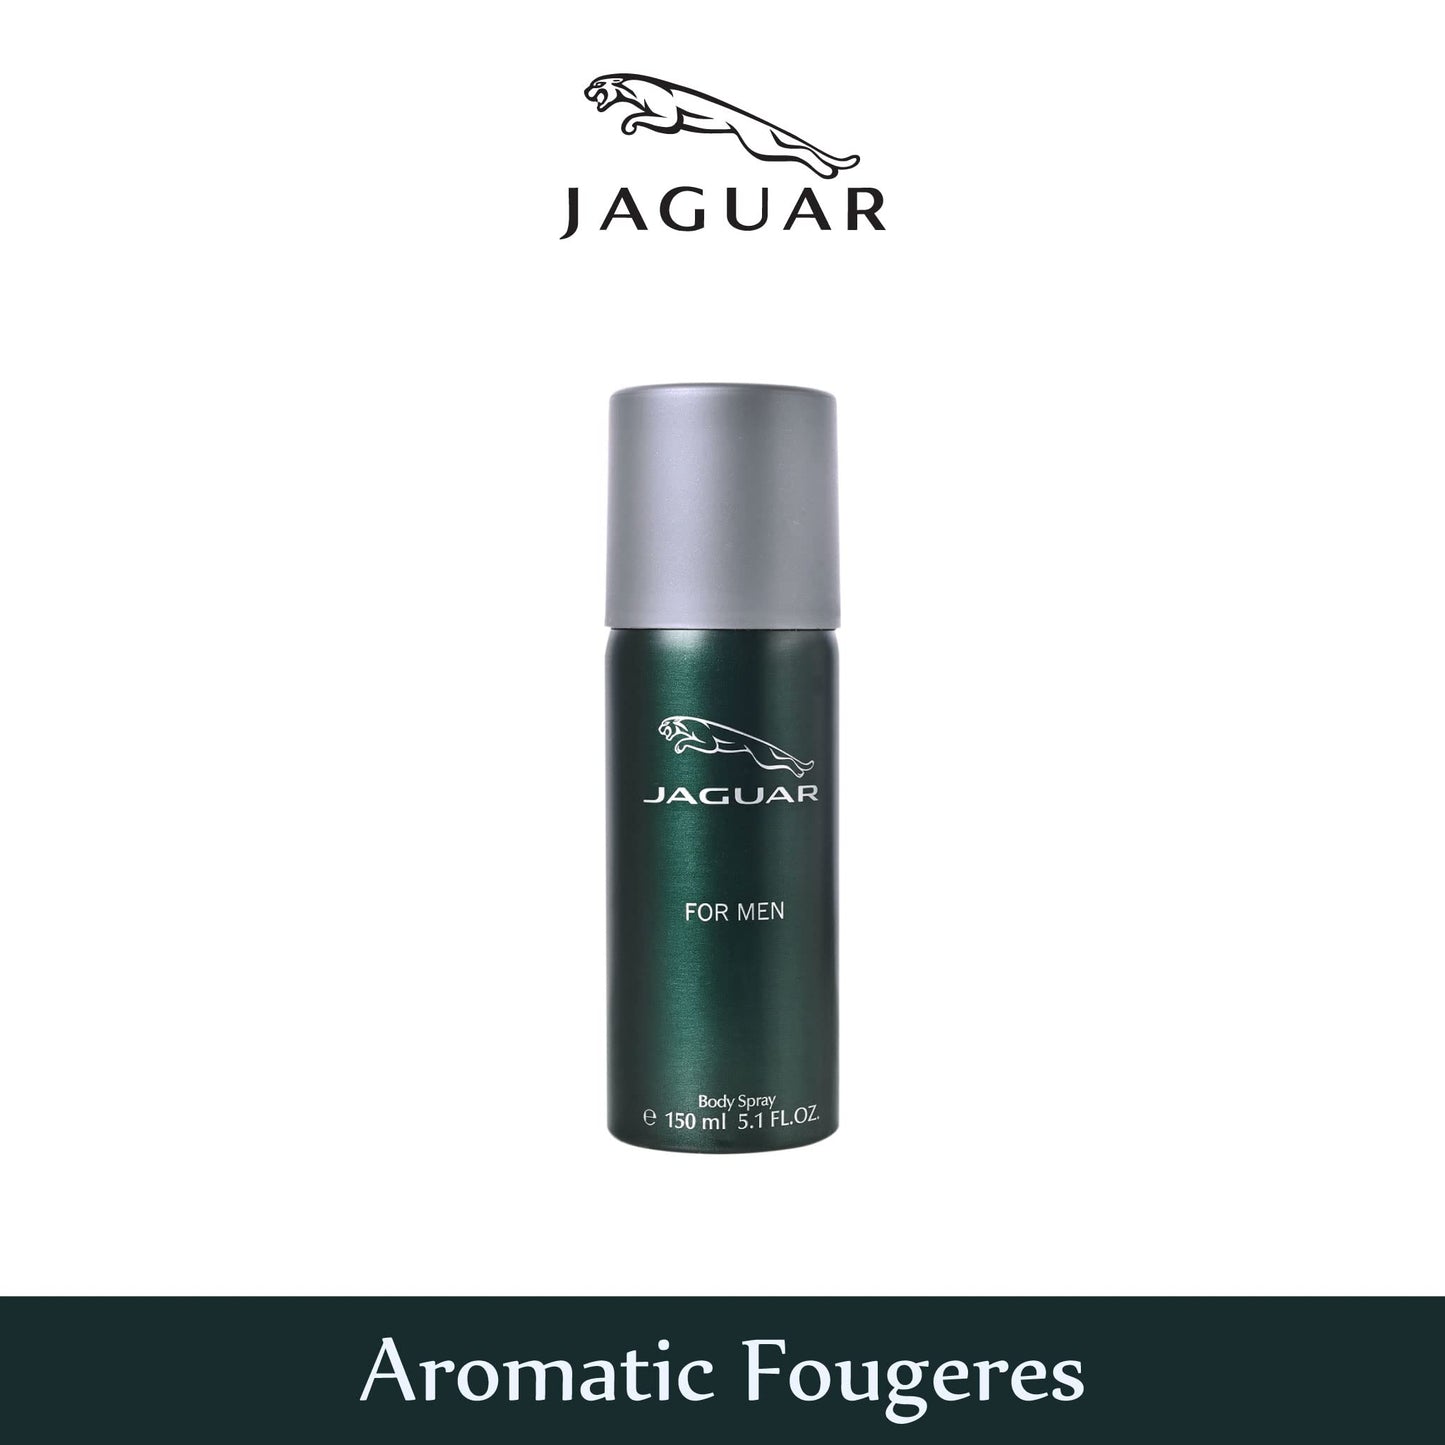 Jaguar Deodorant Body Spray for Men, Green, 150 ml  from JAGUAR